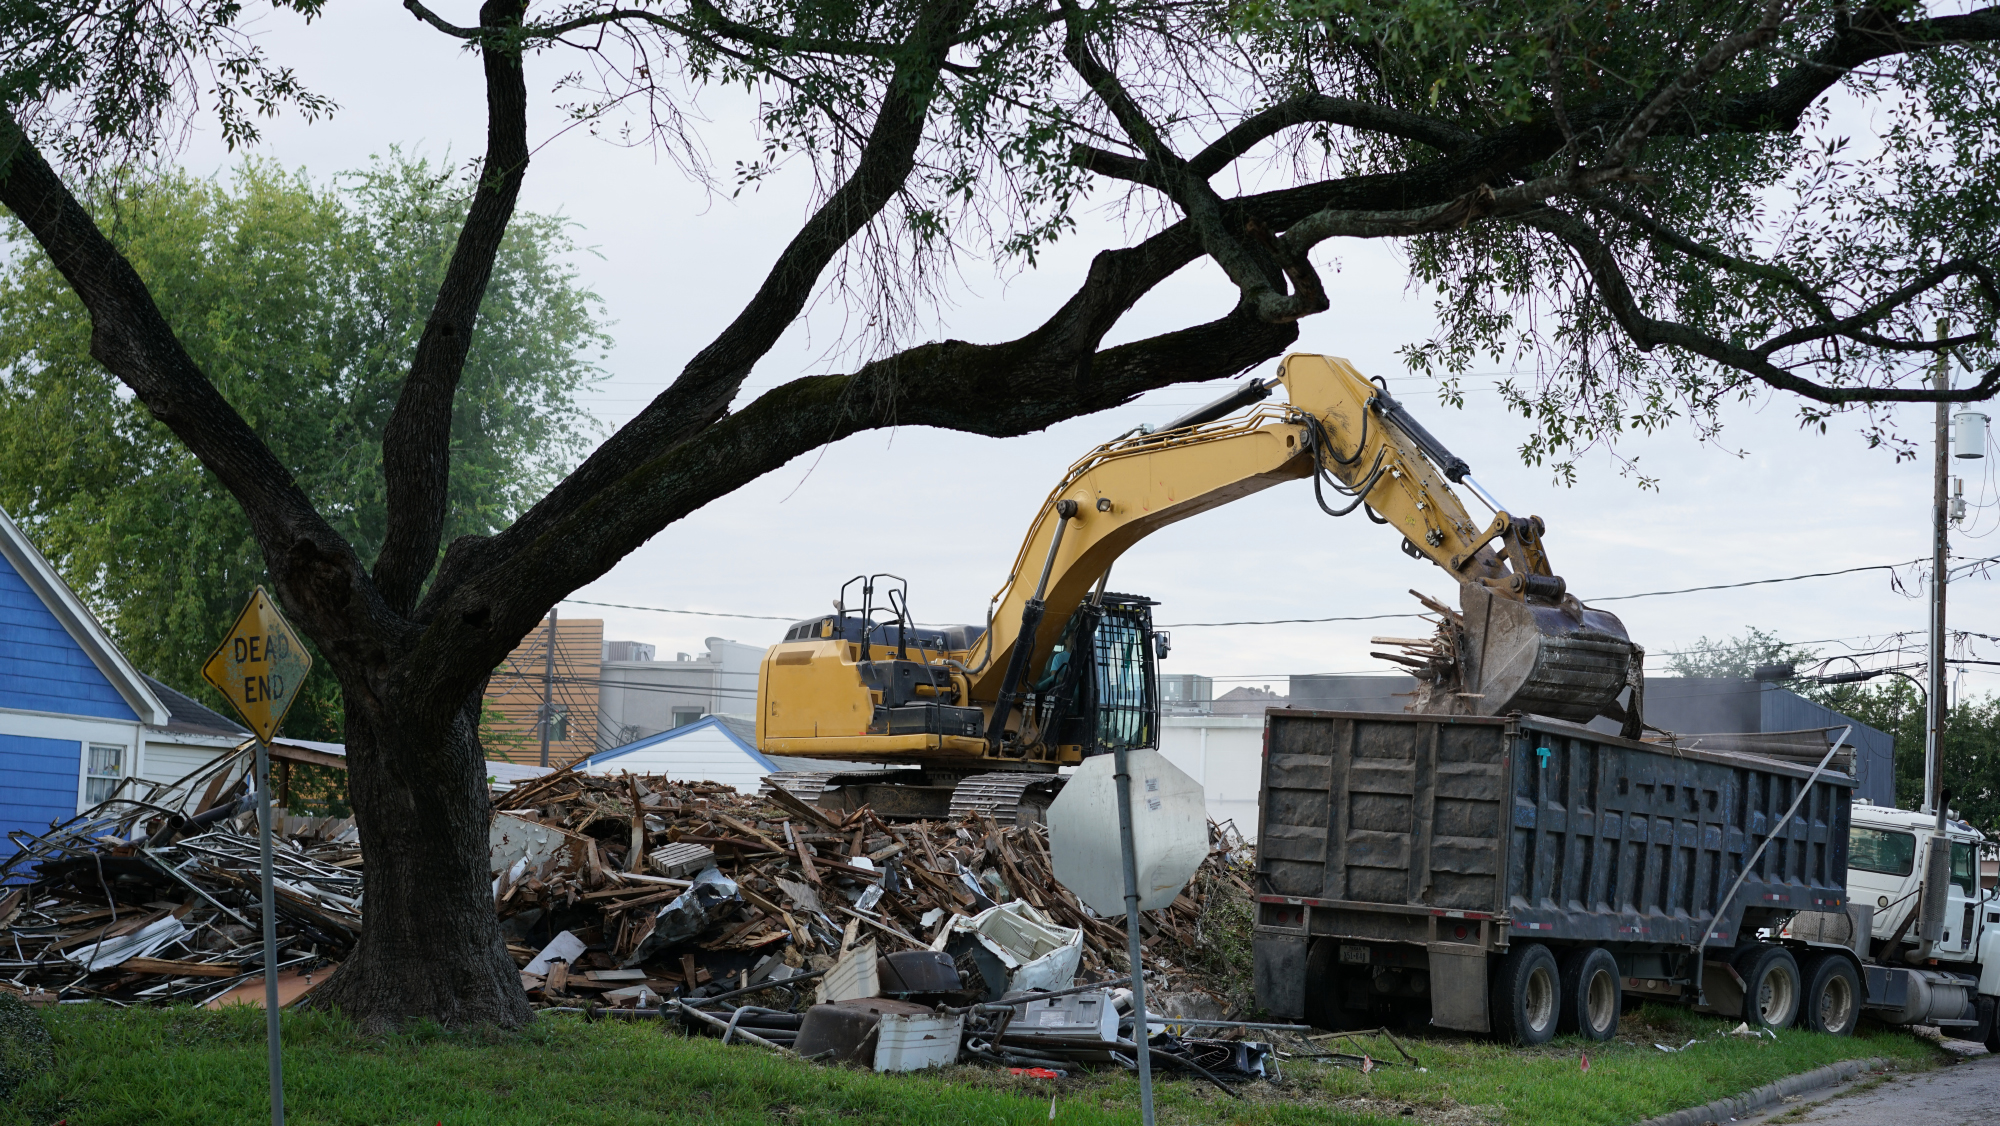 Clearing debris after Hurricane Harvey